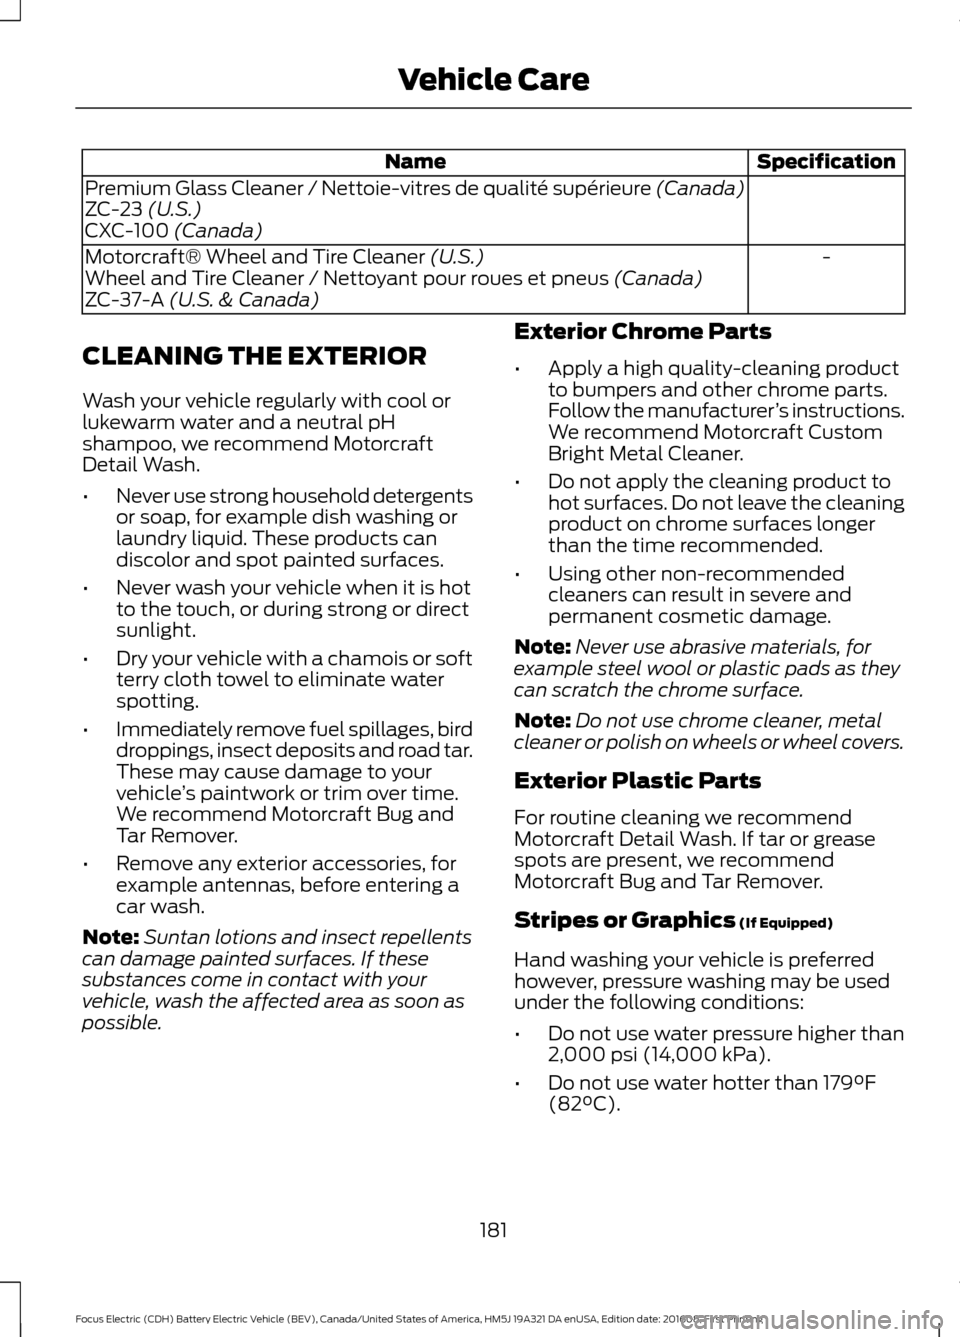 FORD FOCUS ELECTRIC 2017 3.G Owners Manual Specification
Name
Premium Glass Cleaner / Nettoie-vitres de qualité supérieure (Canada)
ZC-23 (U.S.)
CXC-100 (Canada)
-
Motorcraft® Wheel and Tire Cleaner
 (U.S.)
Wheel and Tire Cleaner / Nettoyan